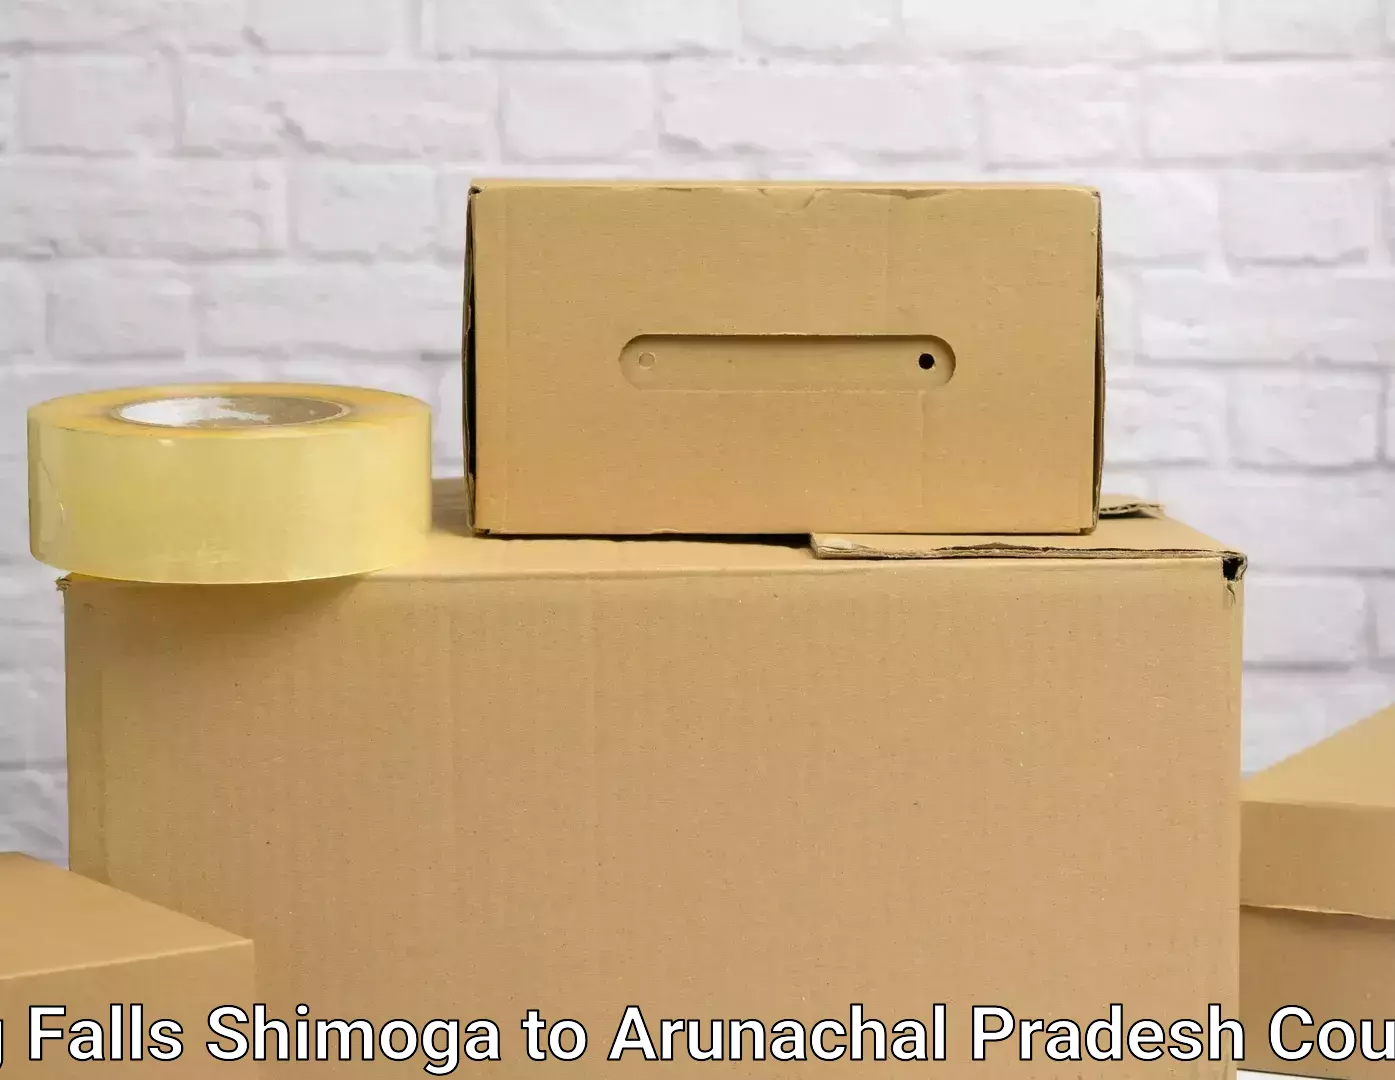 Moving and handling services Jog Falls Shimoga to Arunachal Pradesh